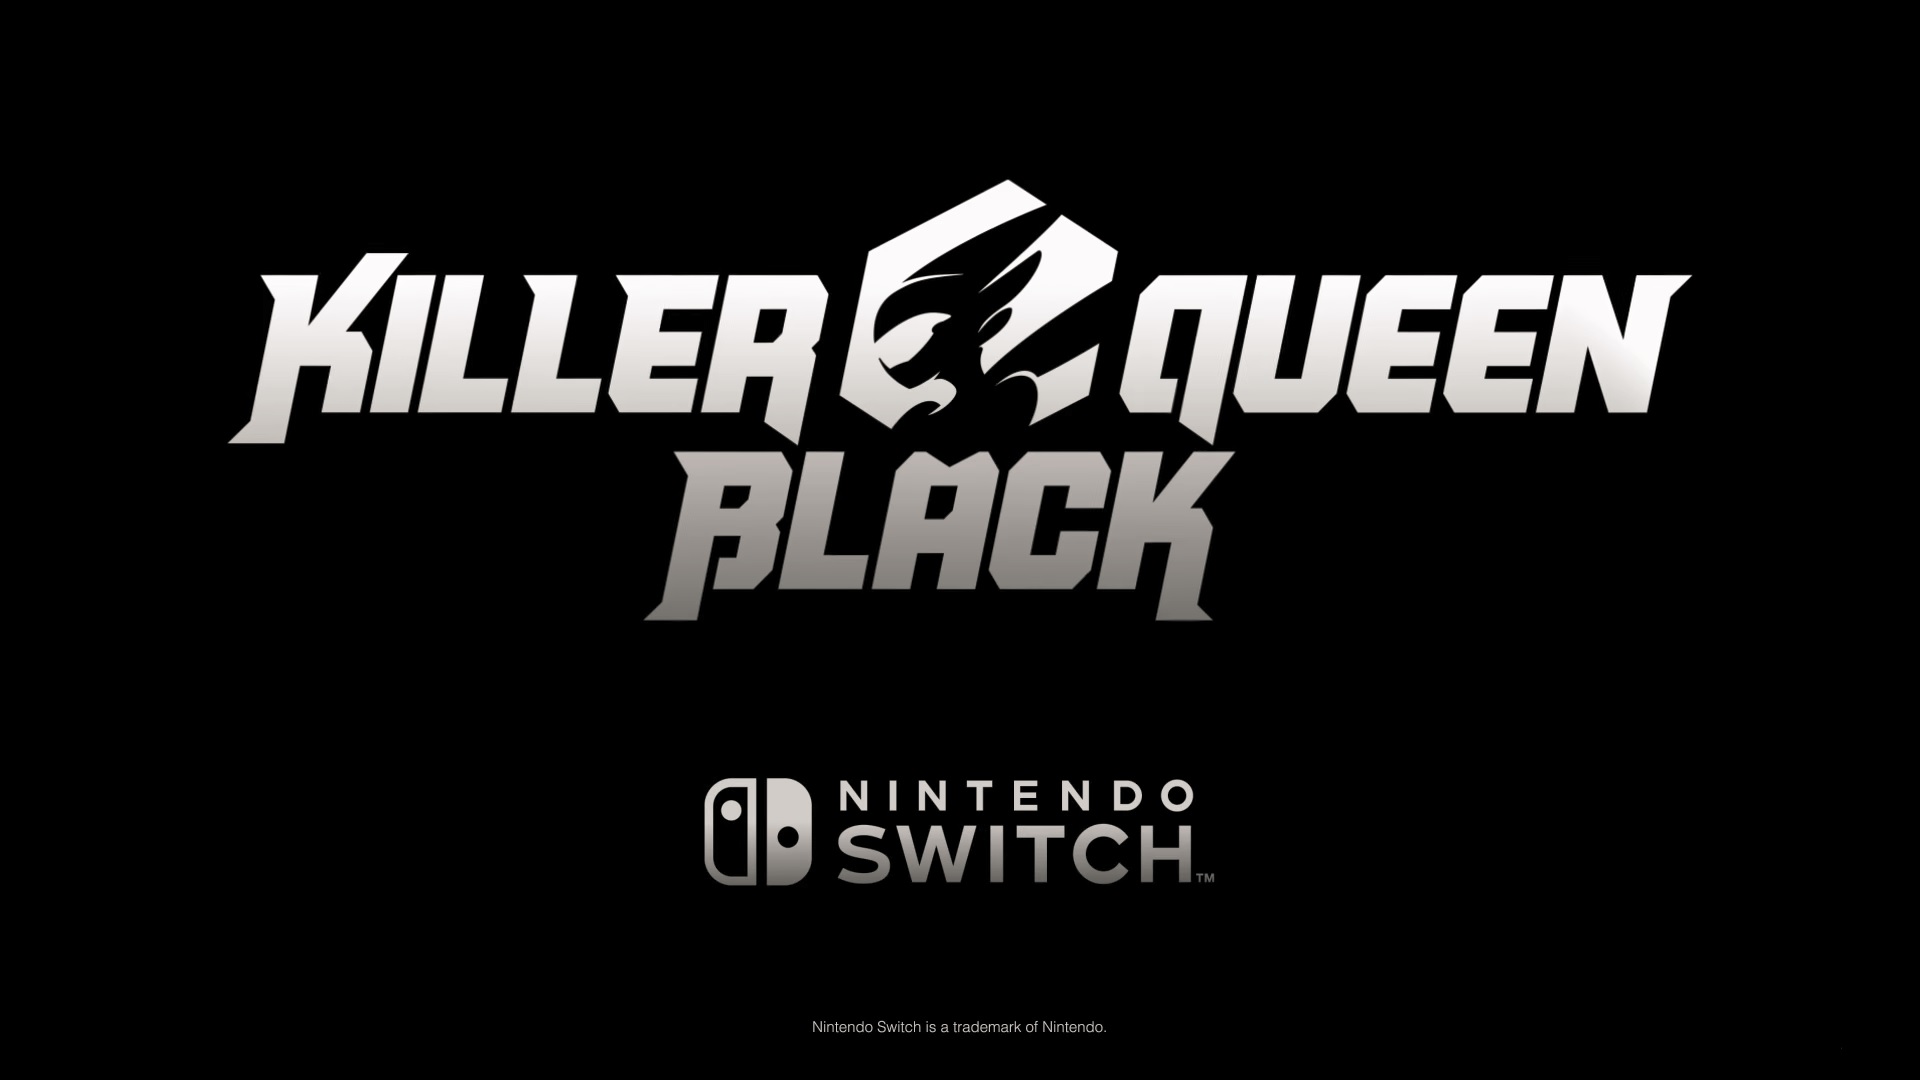 Killer Queen Black annunciato ufficialmente